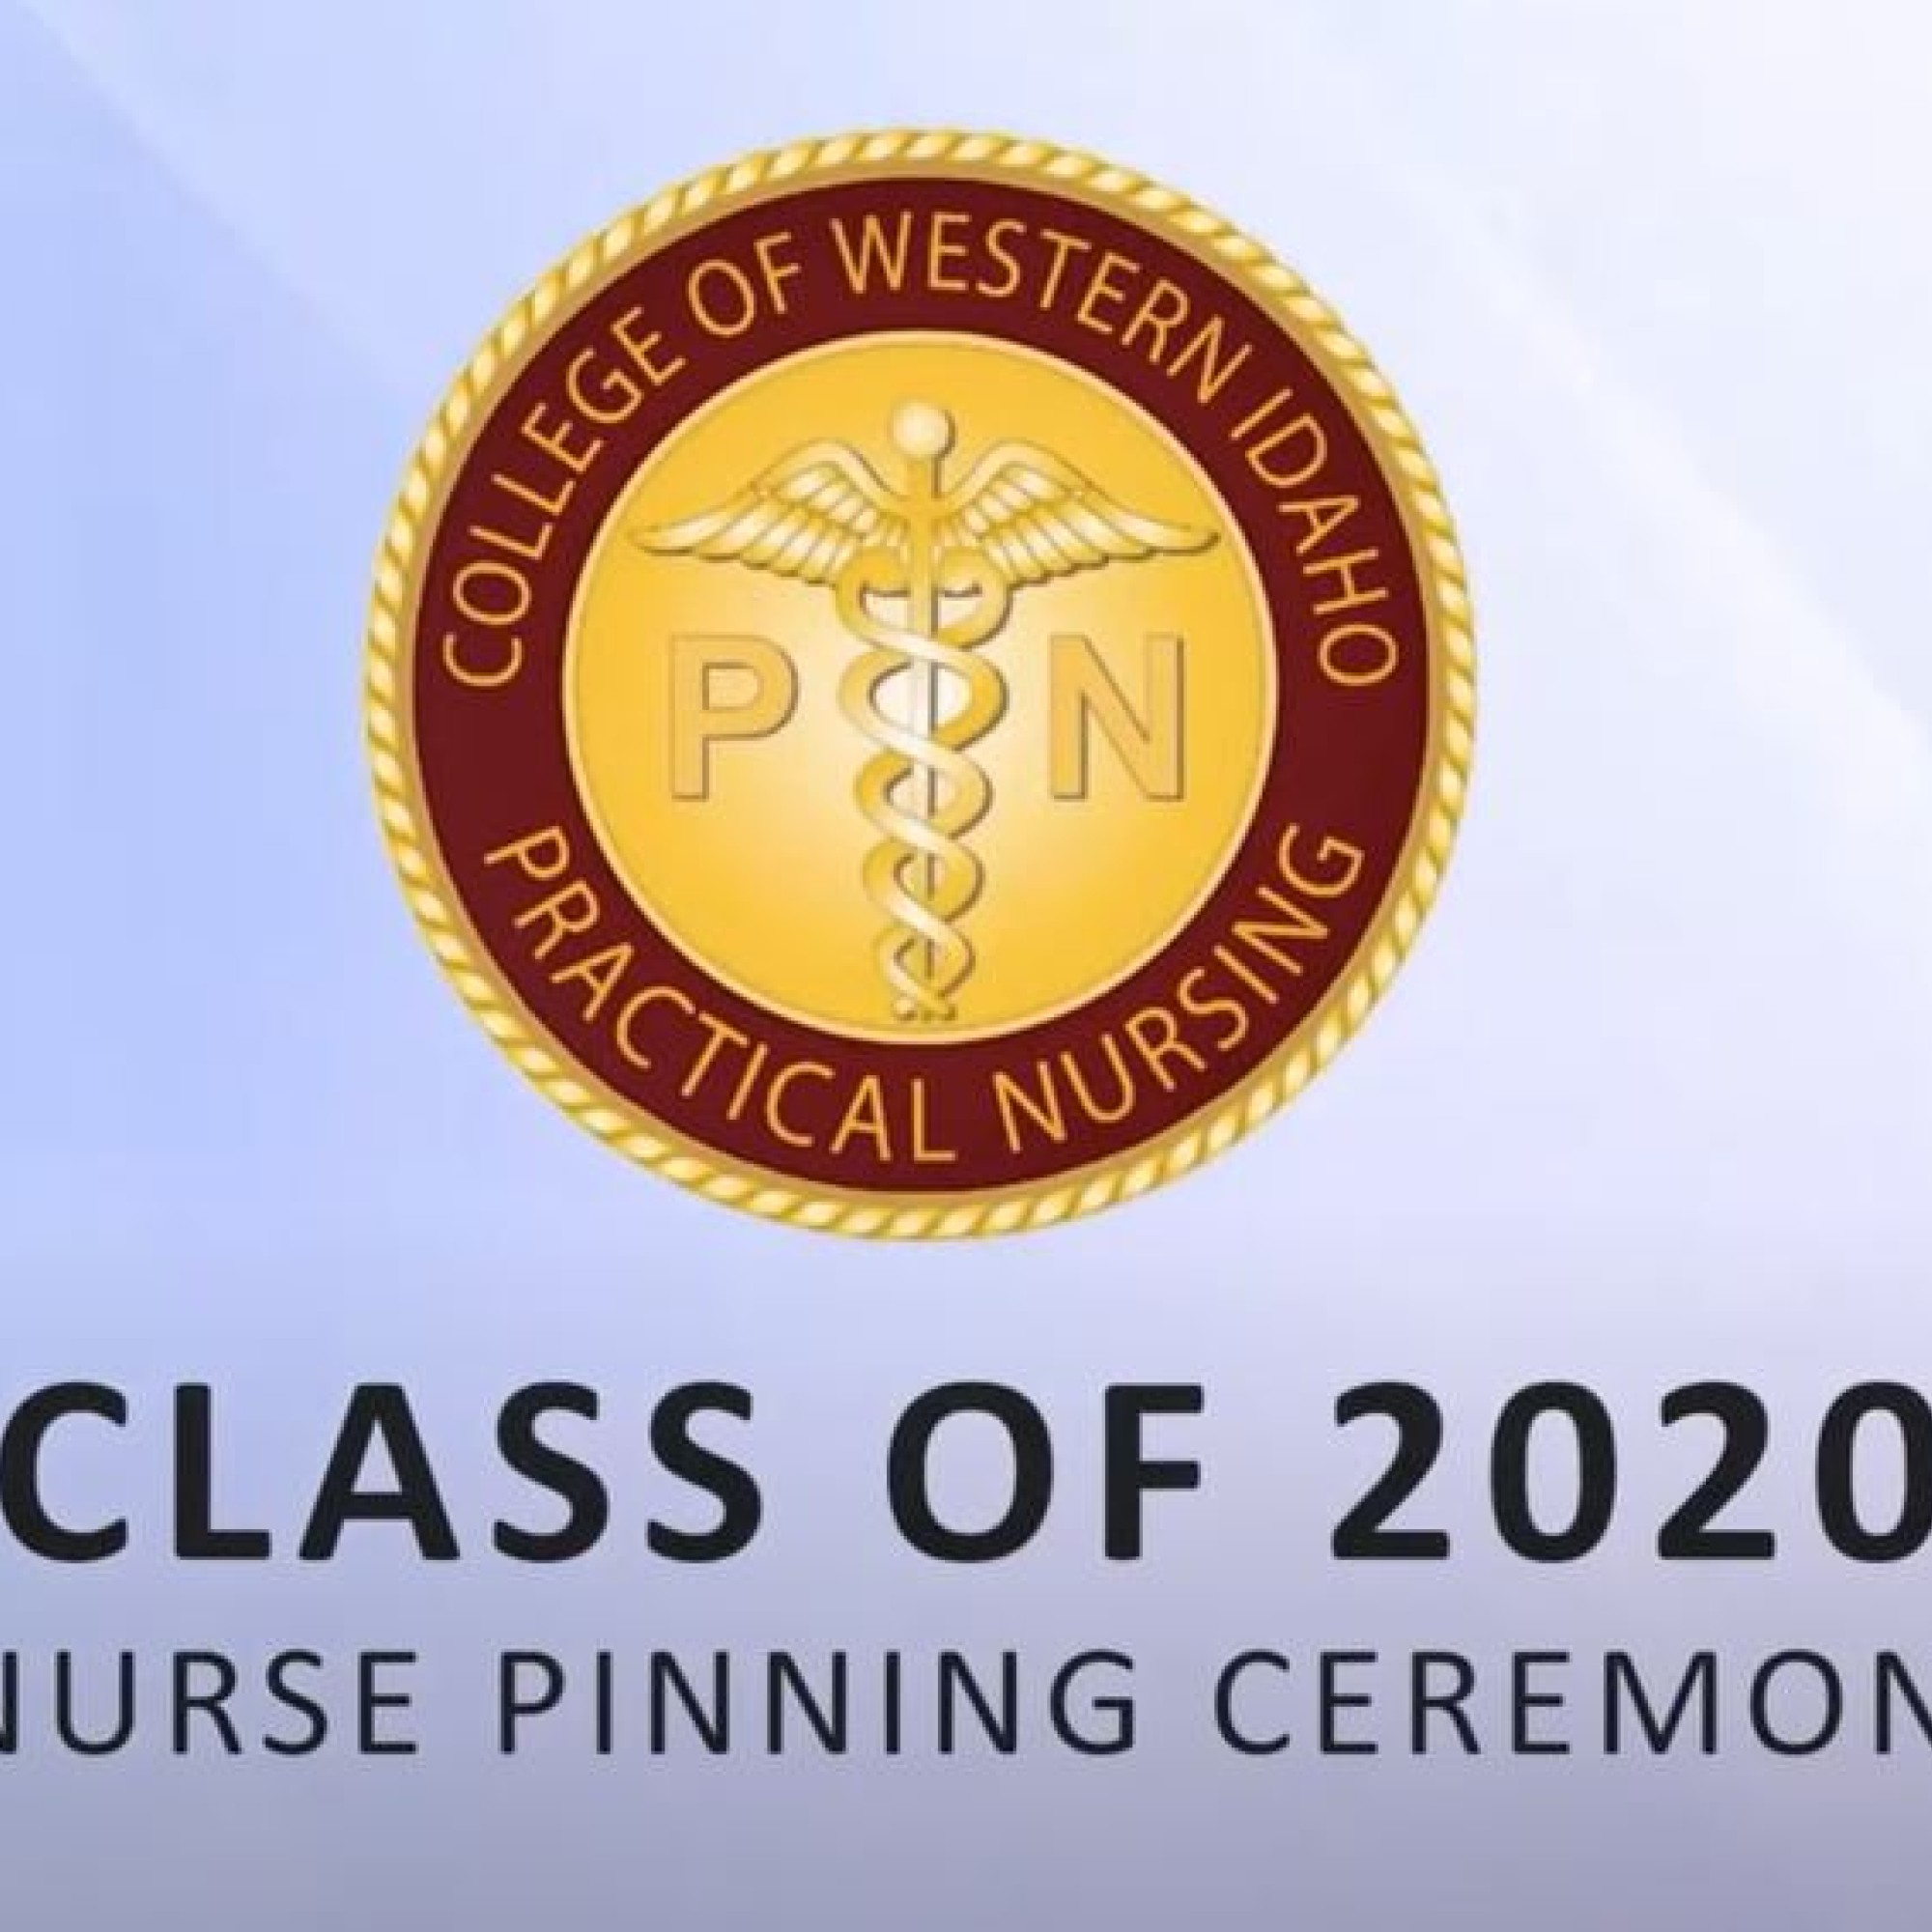 College of Western Idaho's Practical Nursing Program Class of 2020 Nurse Pinning Ceremony graphic